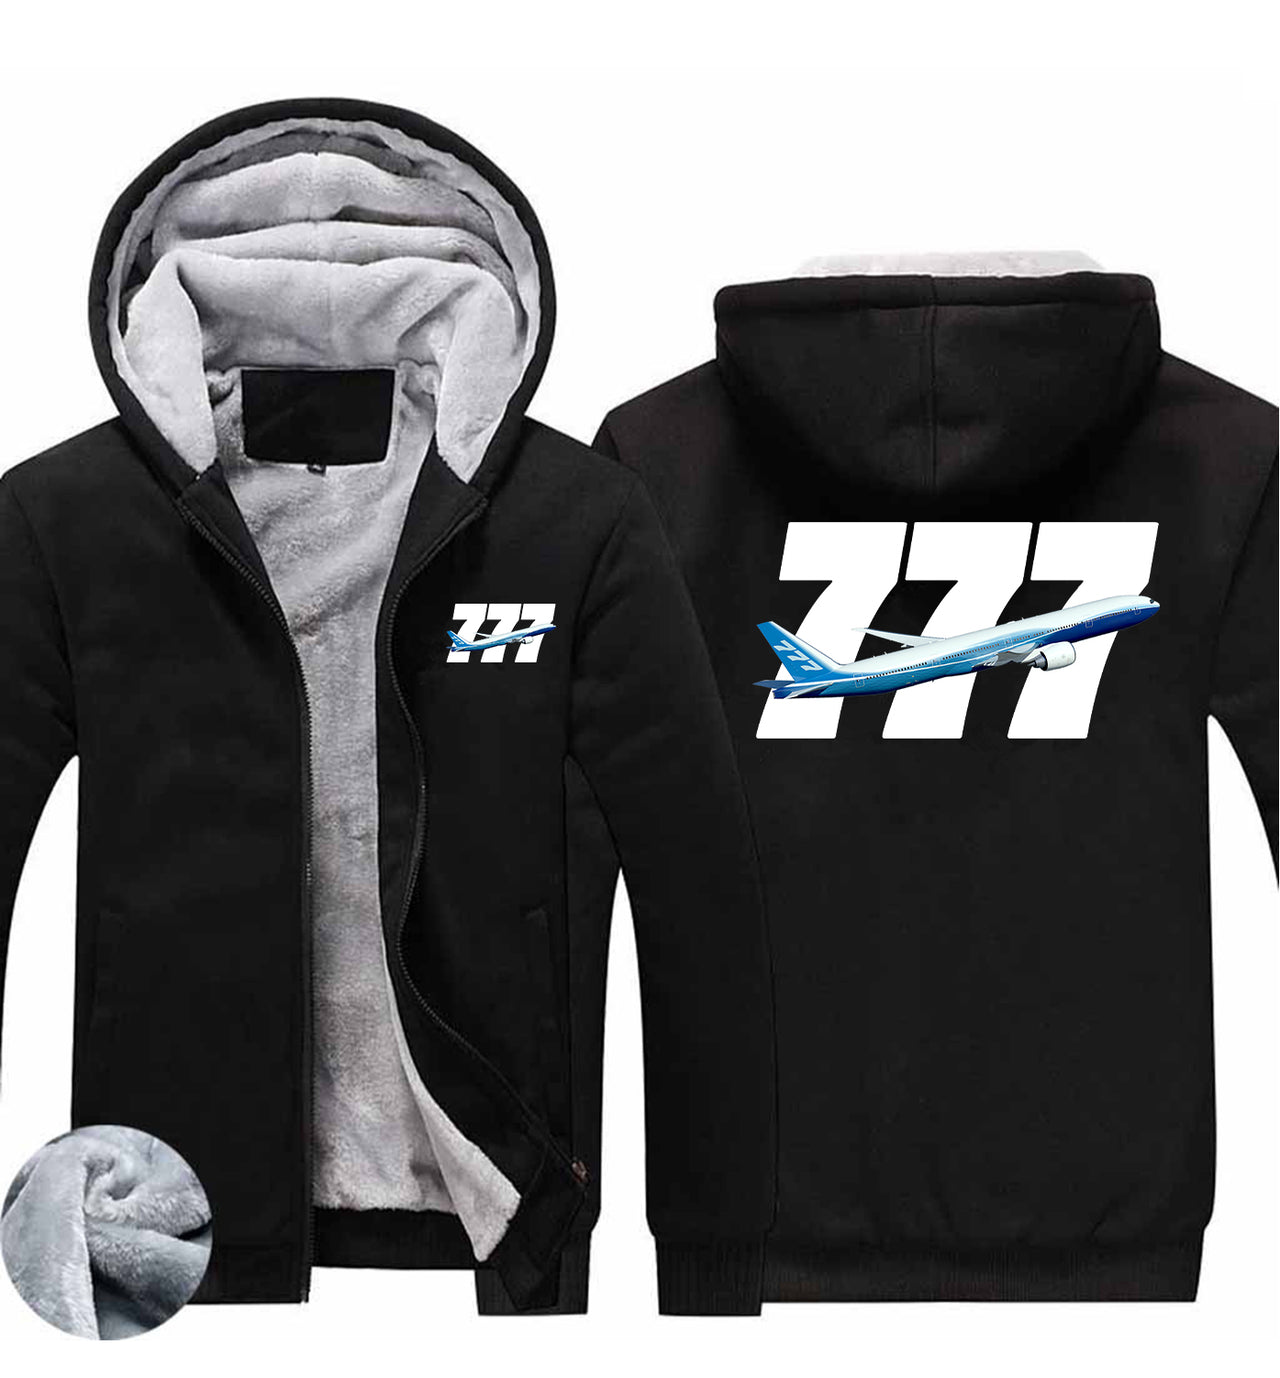 Super Boeing 777 Designed Zipped Sweatshirts